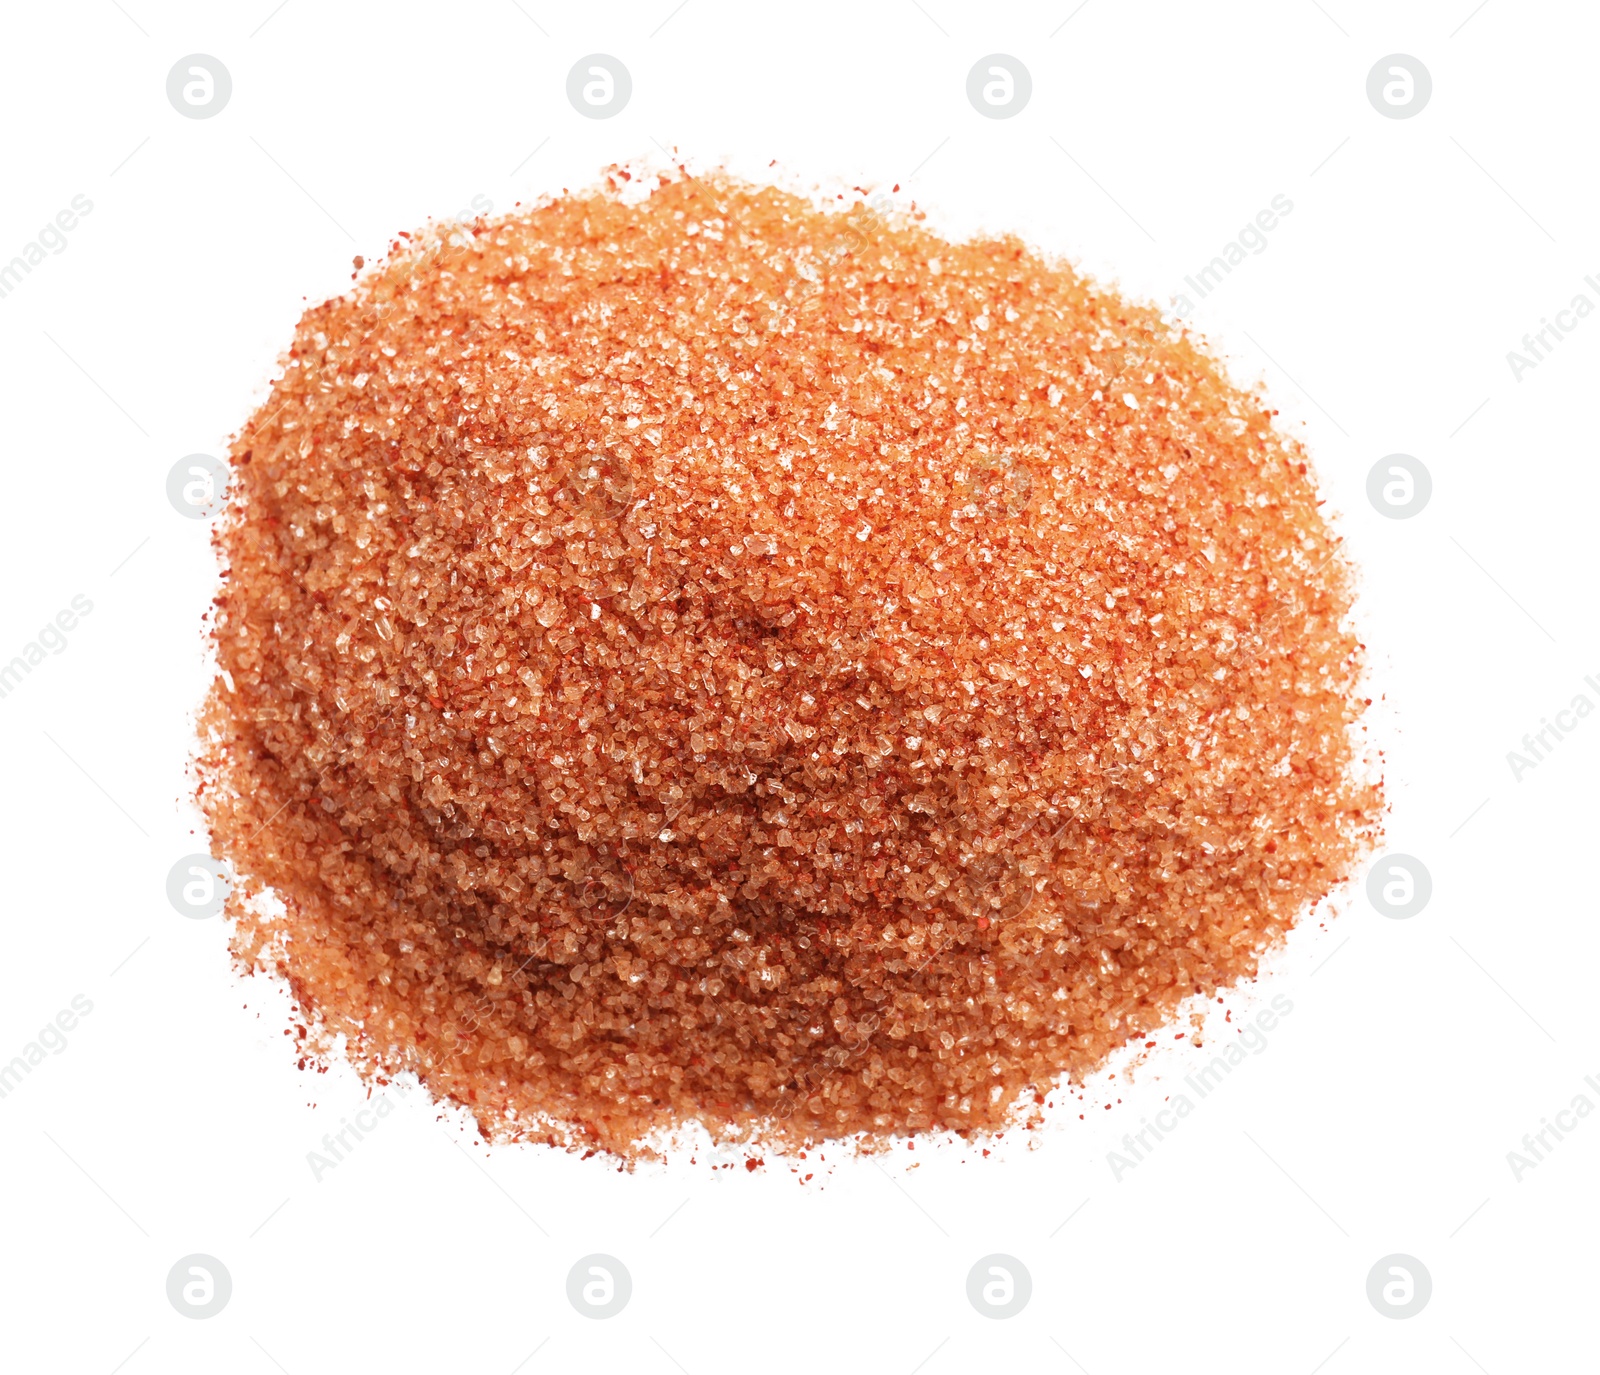 Photo of Heap of orange salt on white background, top view